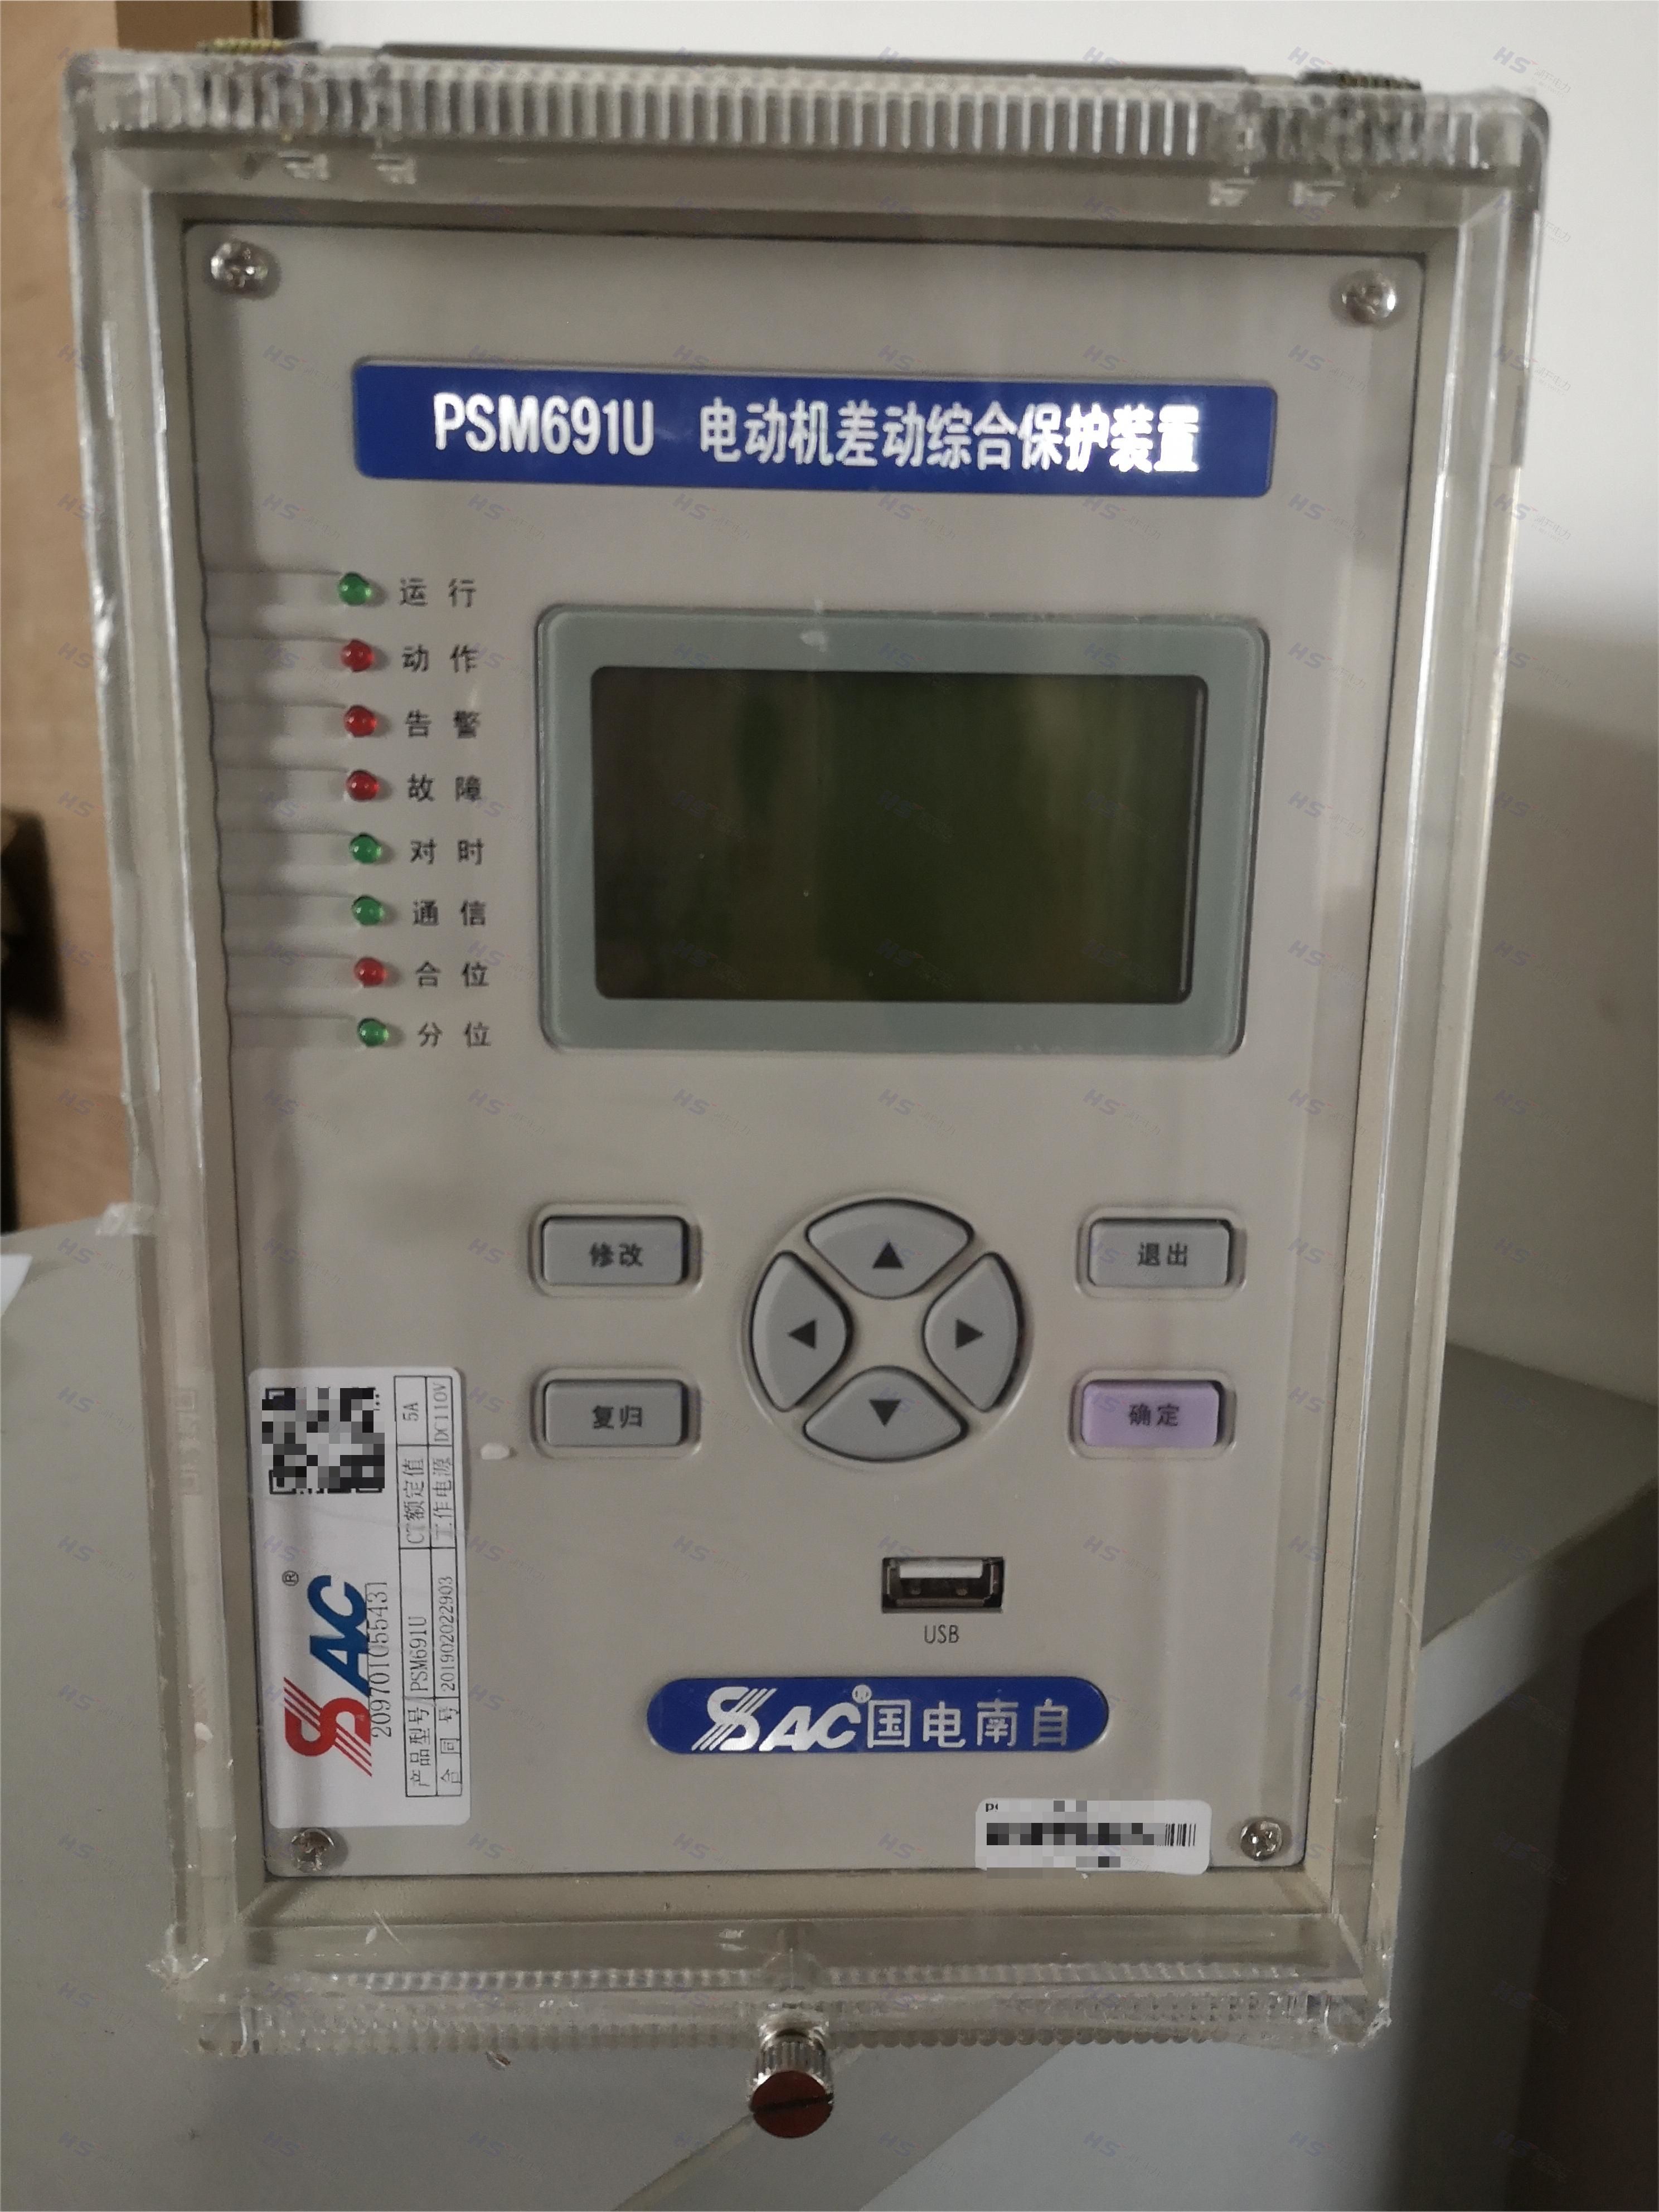 PSM691U电动机差动综合保护测控装置